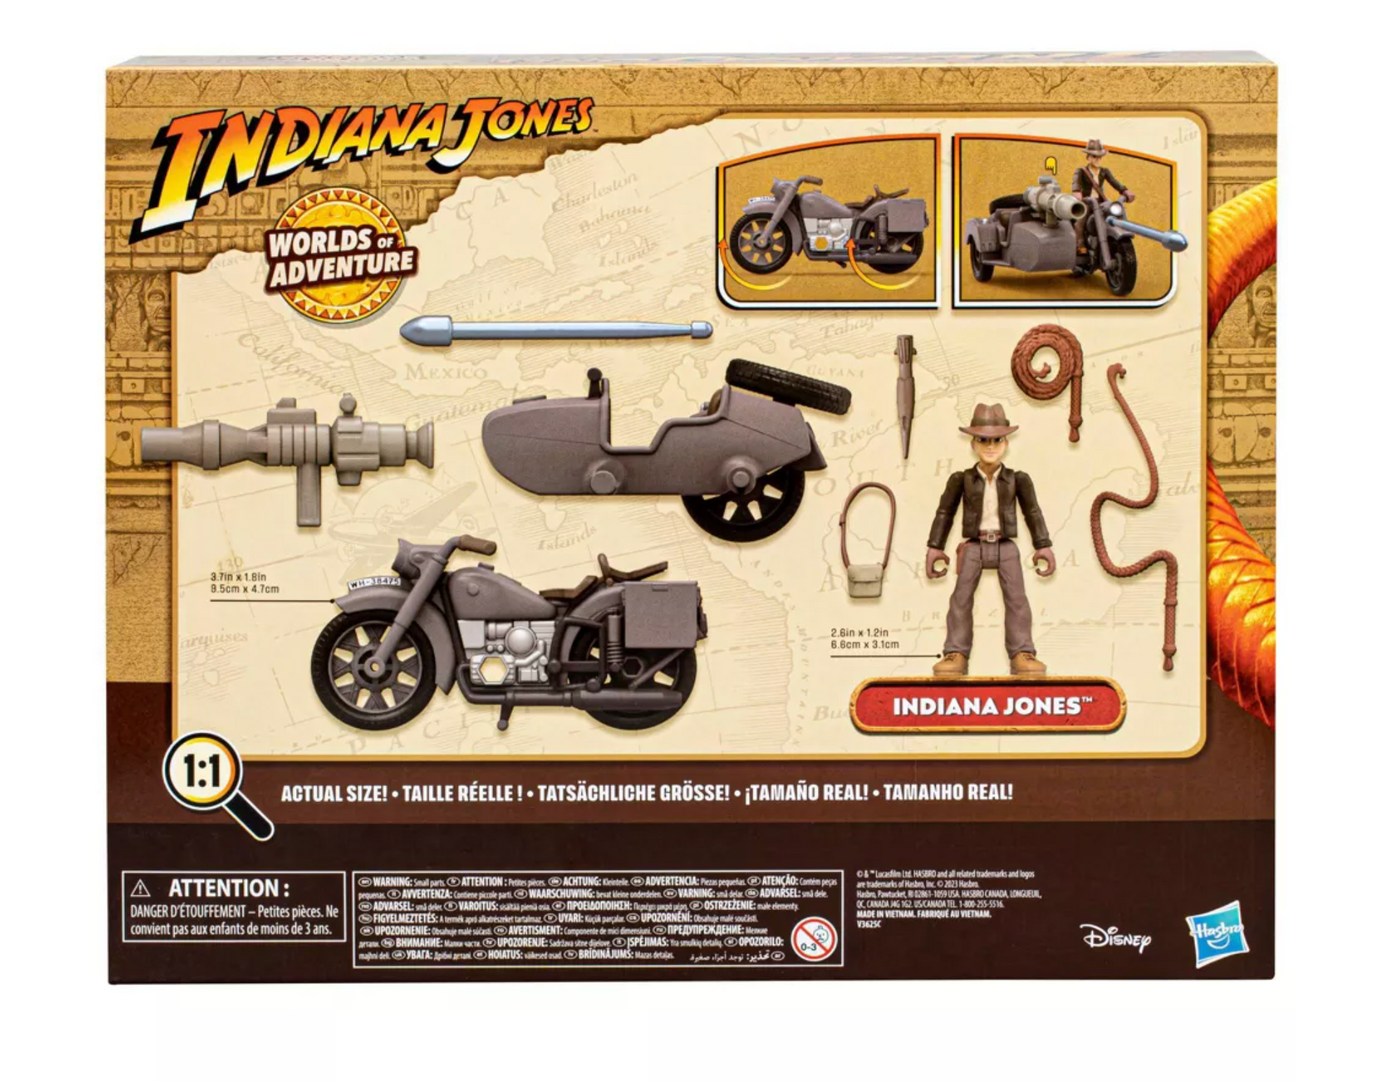 Disney Indiana Jones Worlds of Adventure Action Figure w Motorcycle Sidecar New